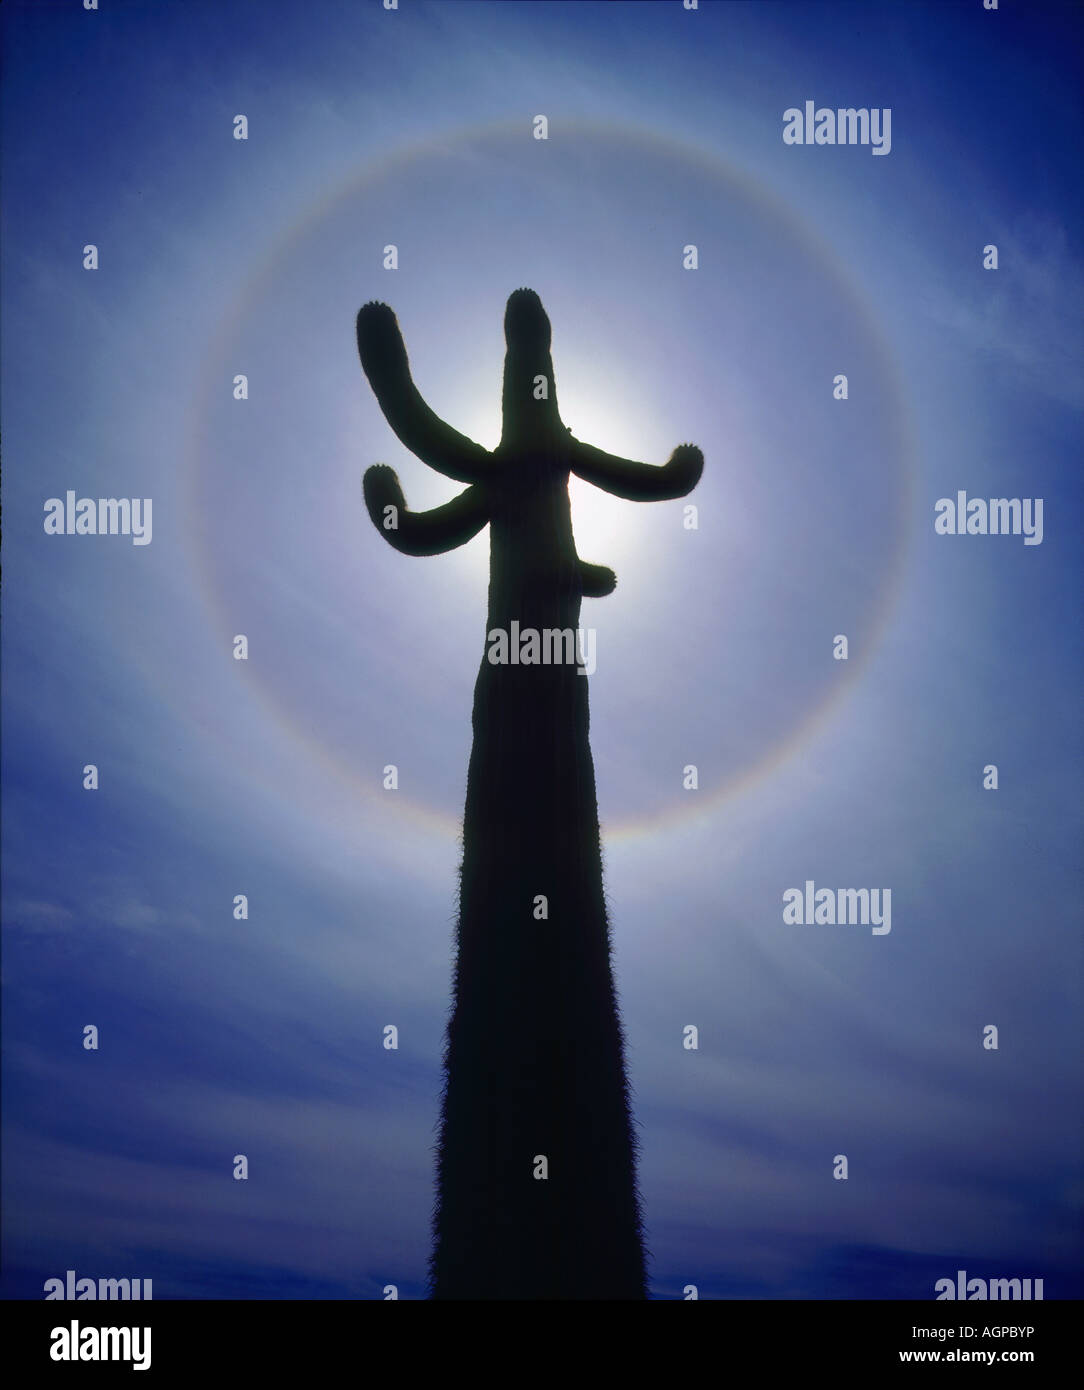 USA, Arizona, Organ Pipe Cactus National Monument. The sun's halo around a saguaro cactus. Stock Photo